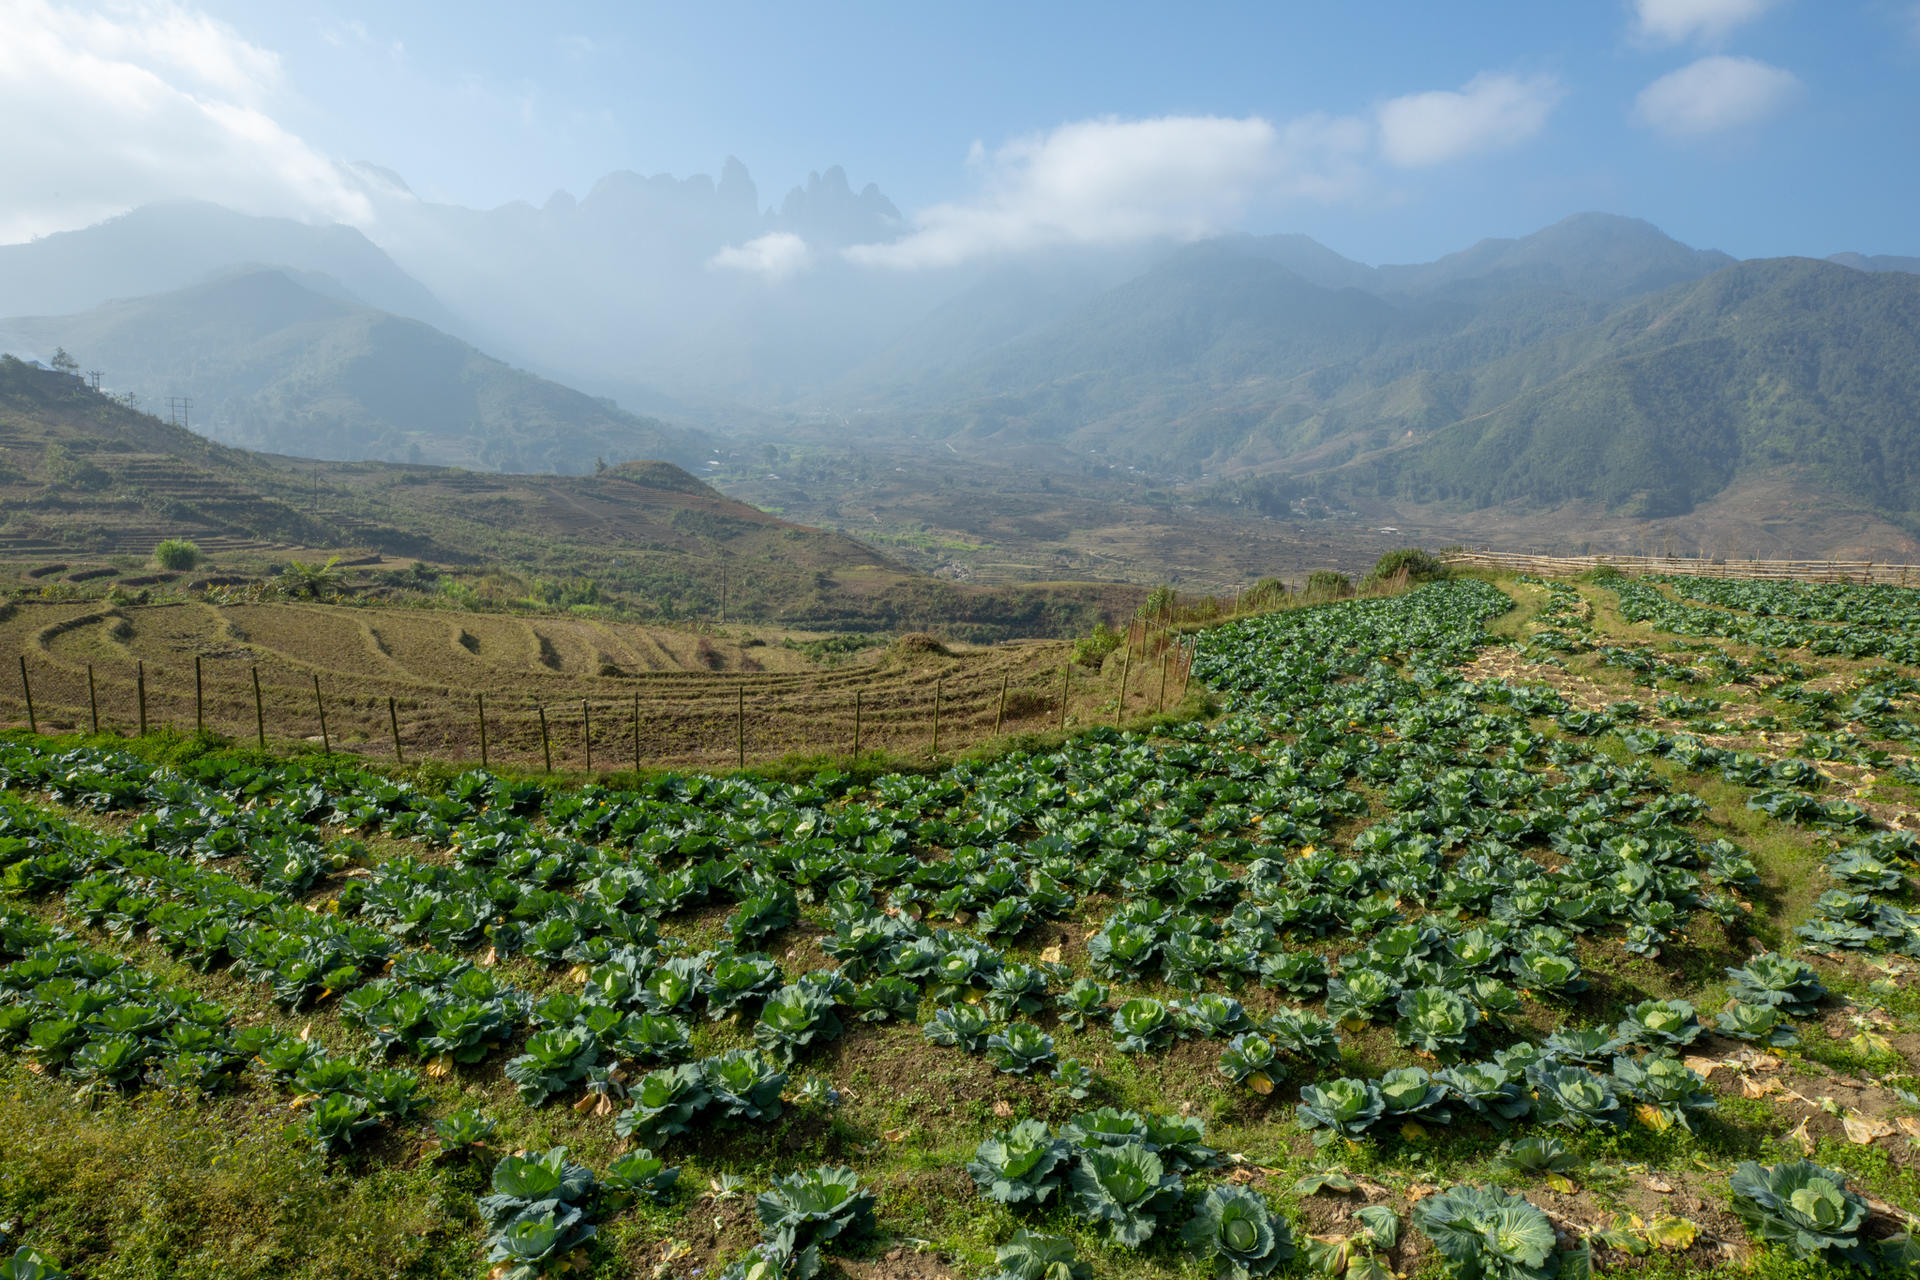 Cabbage field in Sa Pa, Lao Cai province, Vietnam.